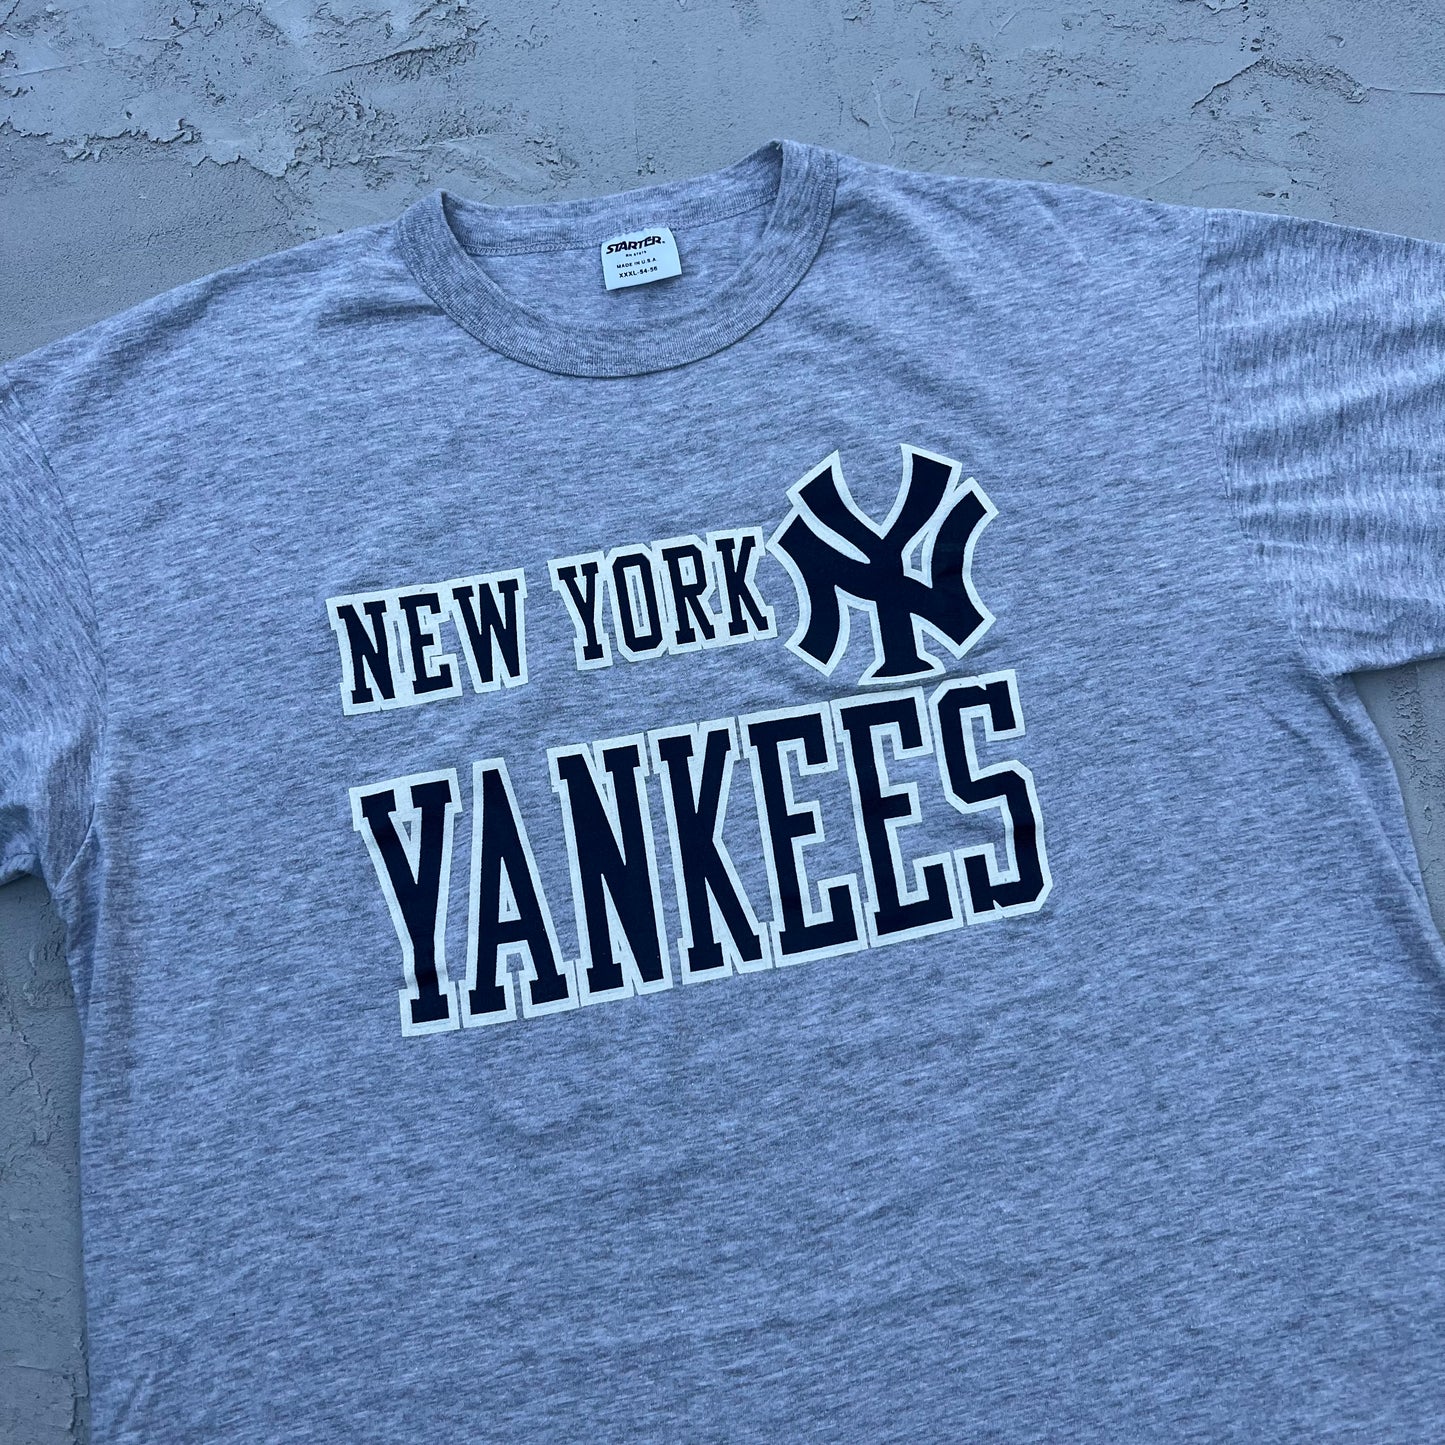 Vintage Starter MLB New York Yankees T Shirt - XL